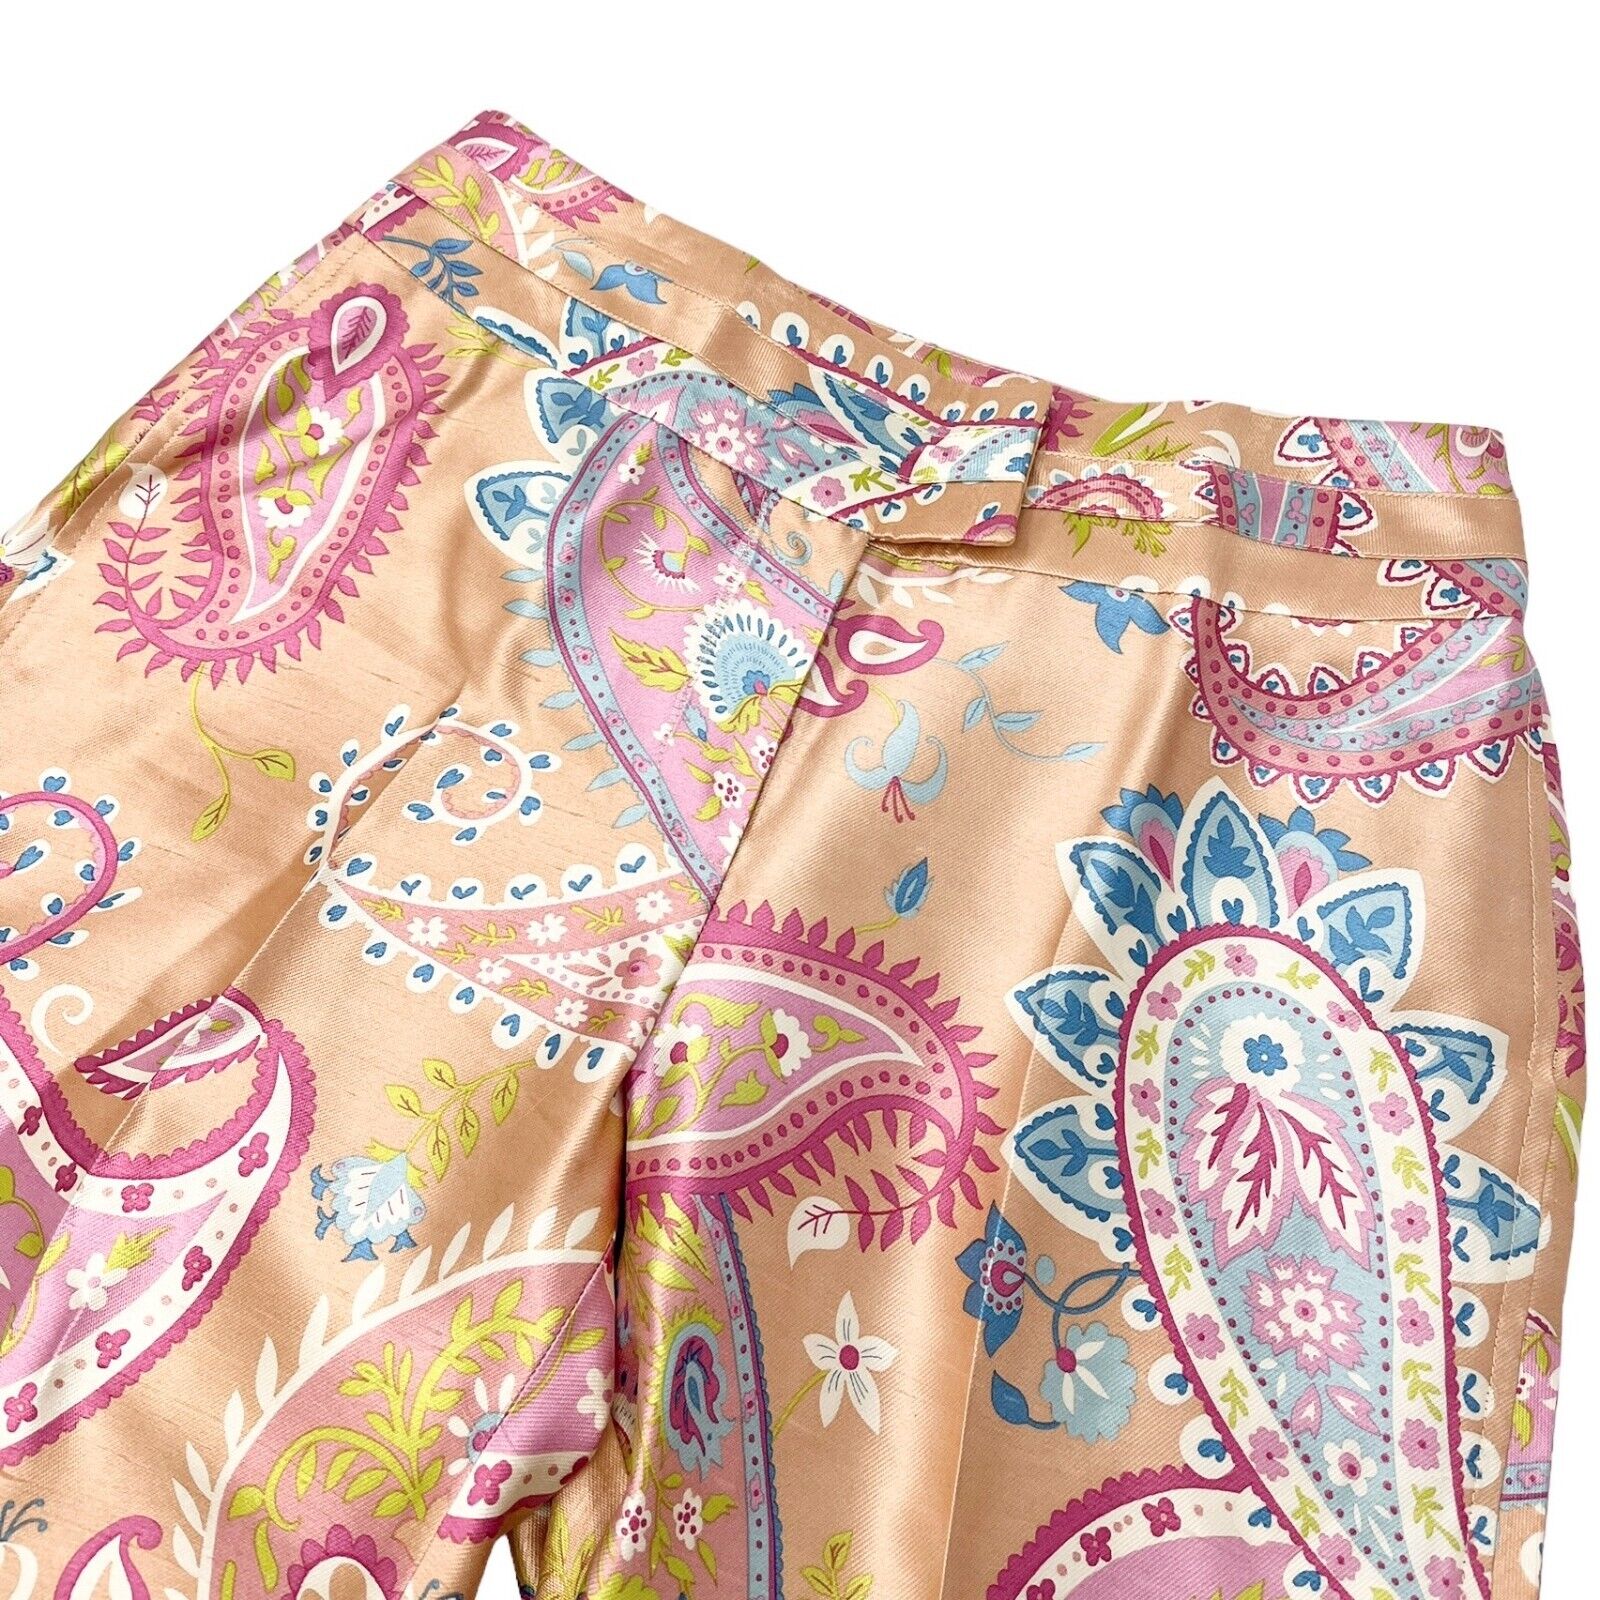 Christian Dior Vintage Tank Top Pants Set #38 #36 Paisley Pink Beige Rank AB+